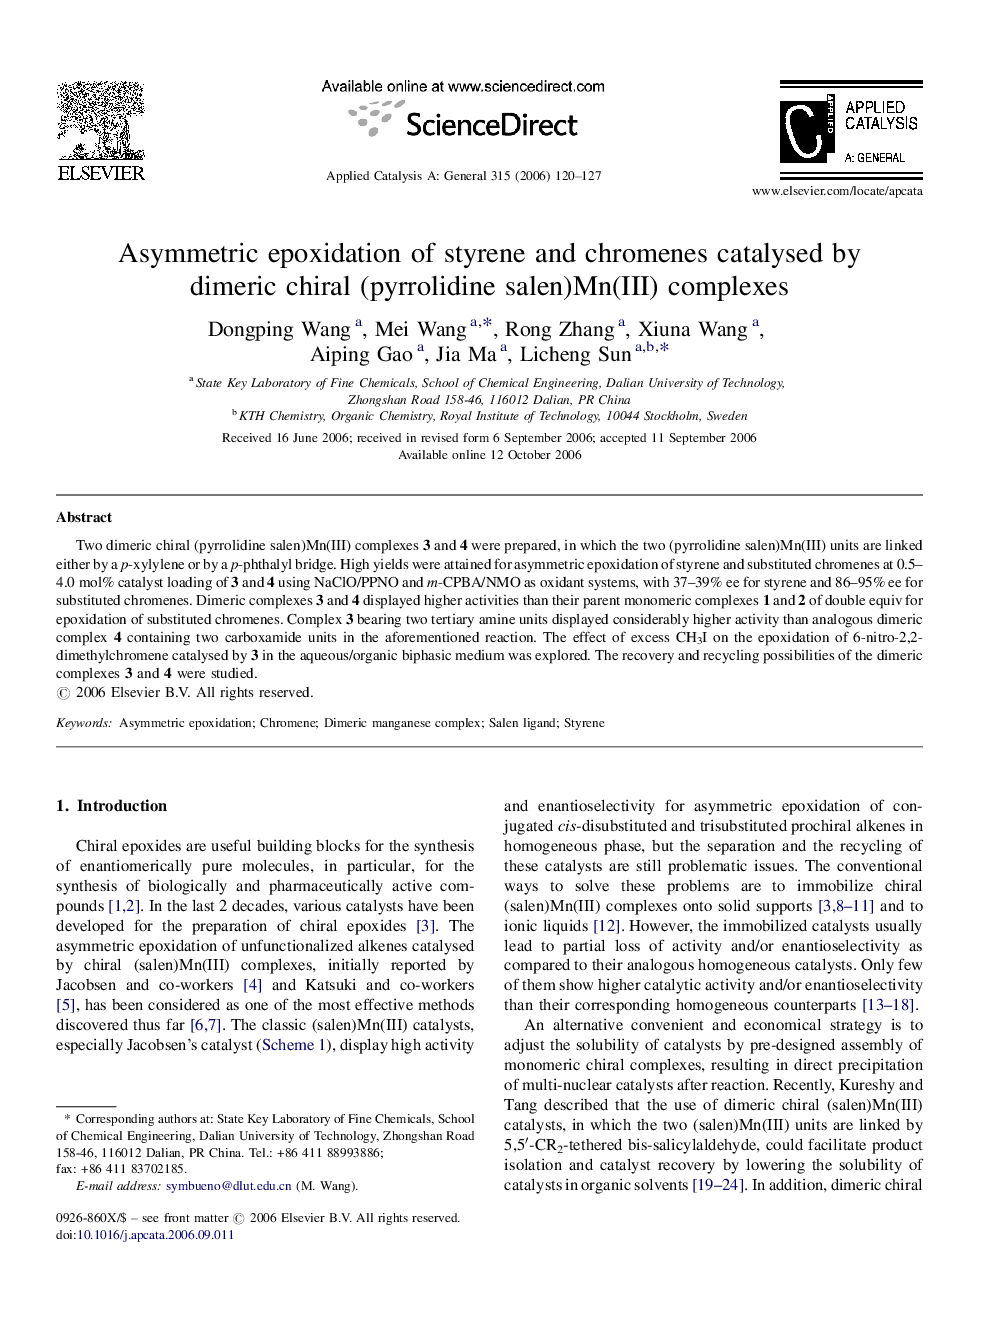 Asymmetric epoxidation of styrene and chromenes catalysed by dimeric chiral (pyrrolidine salen)Mn(III) complexes